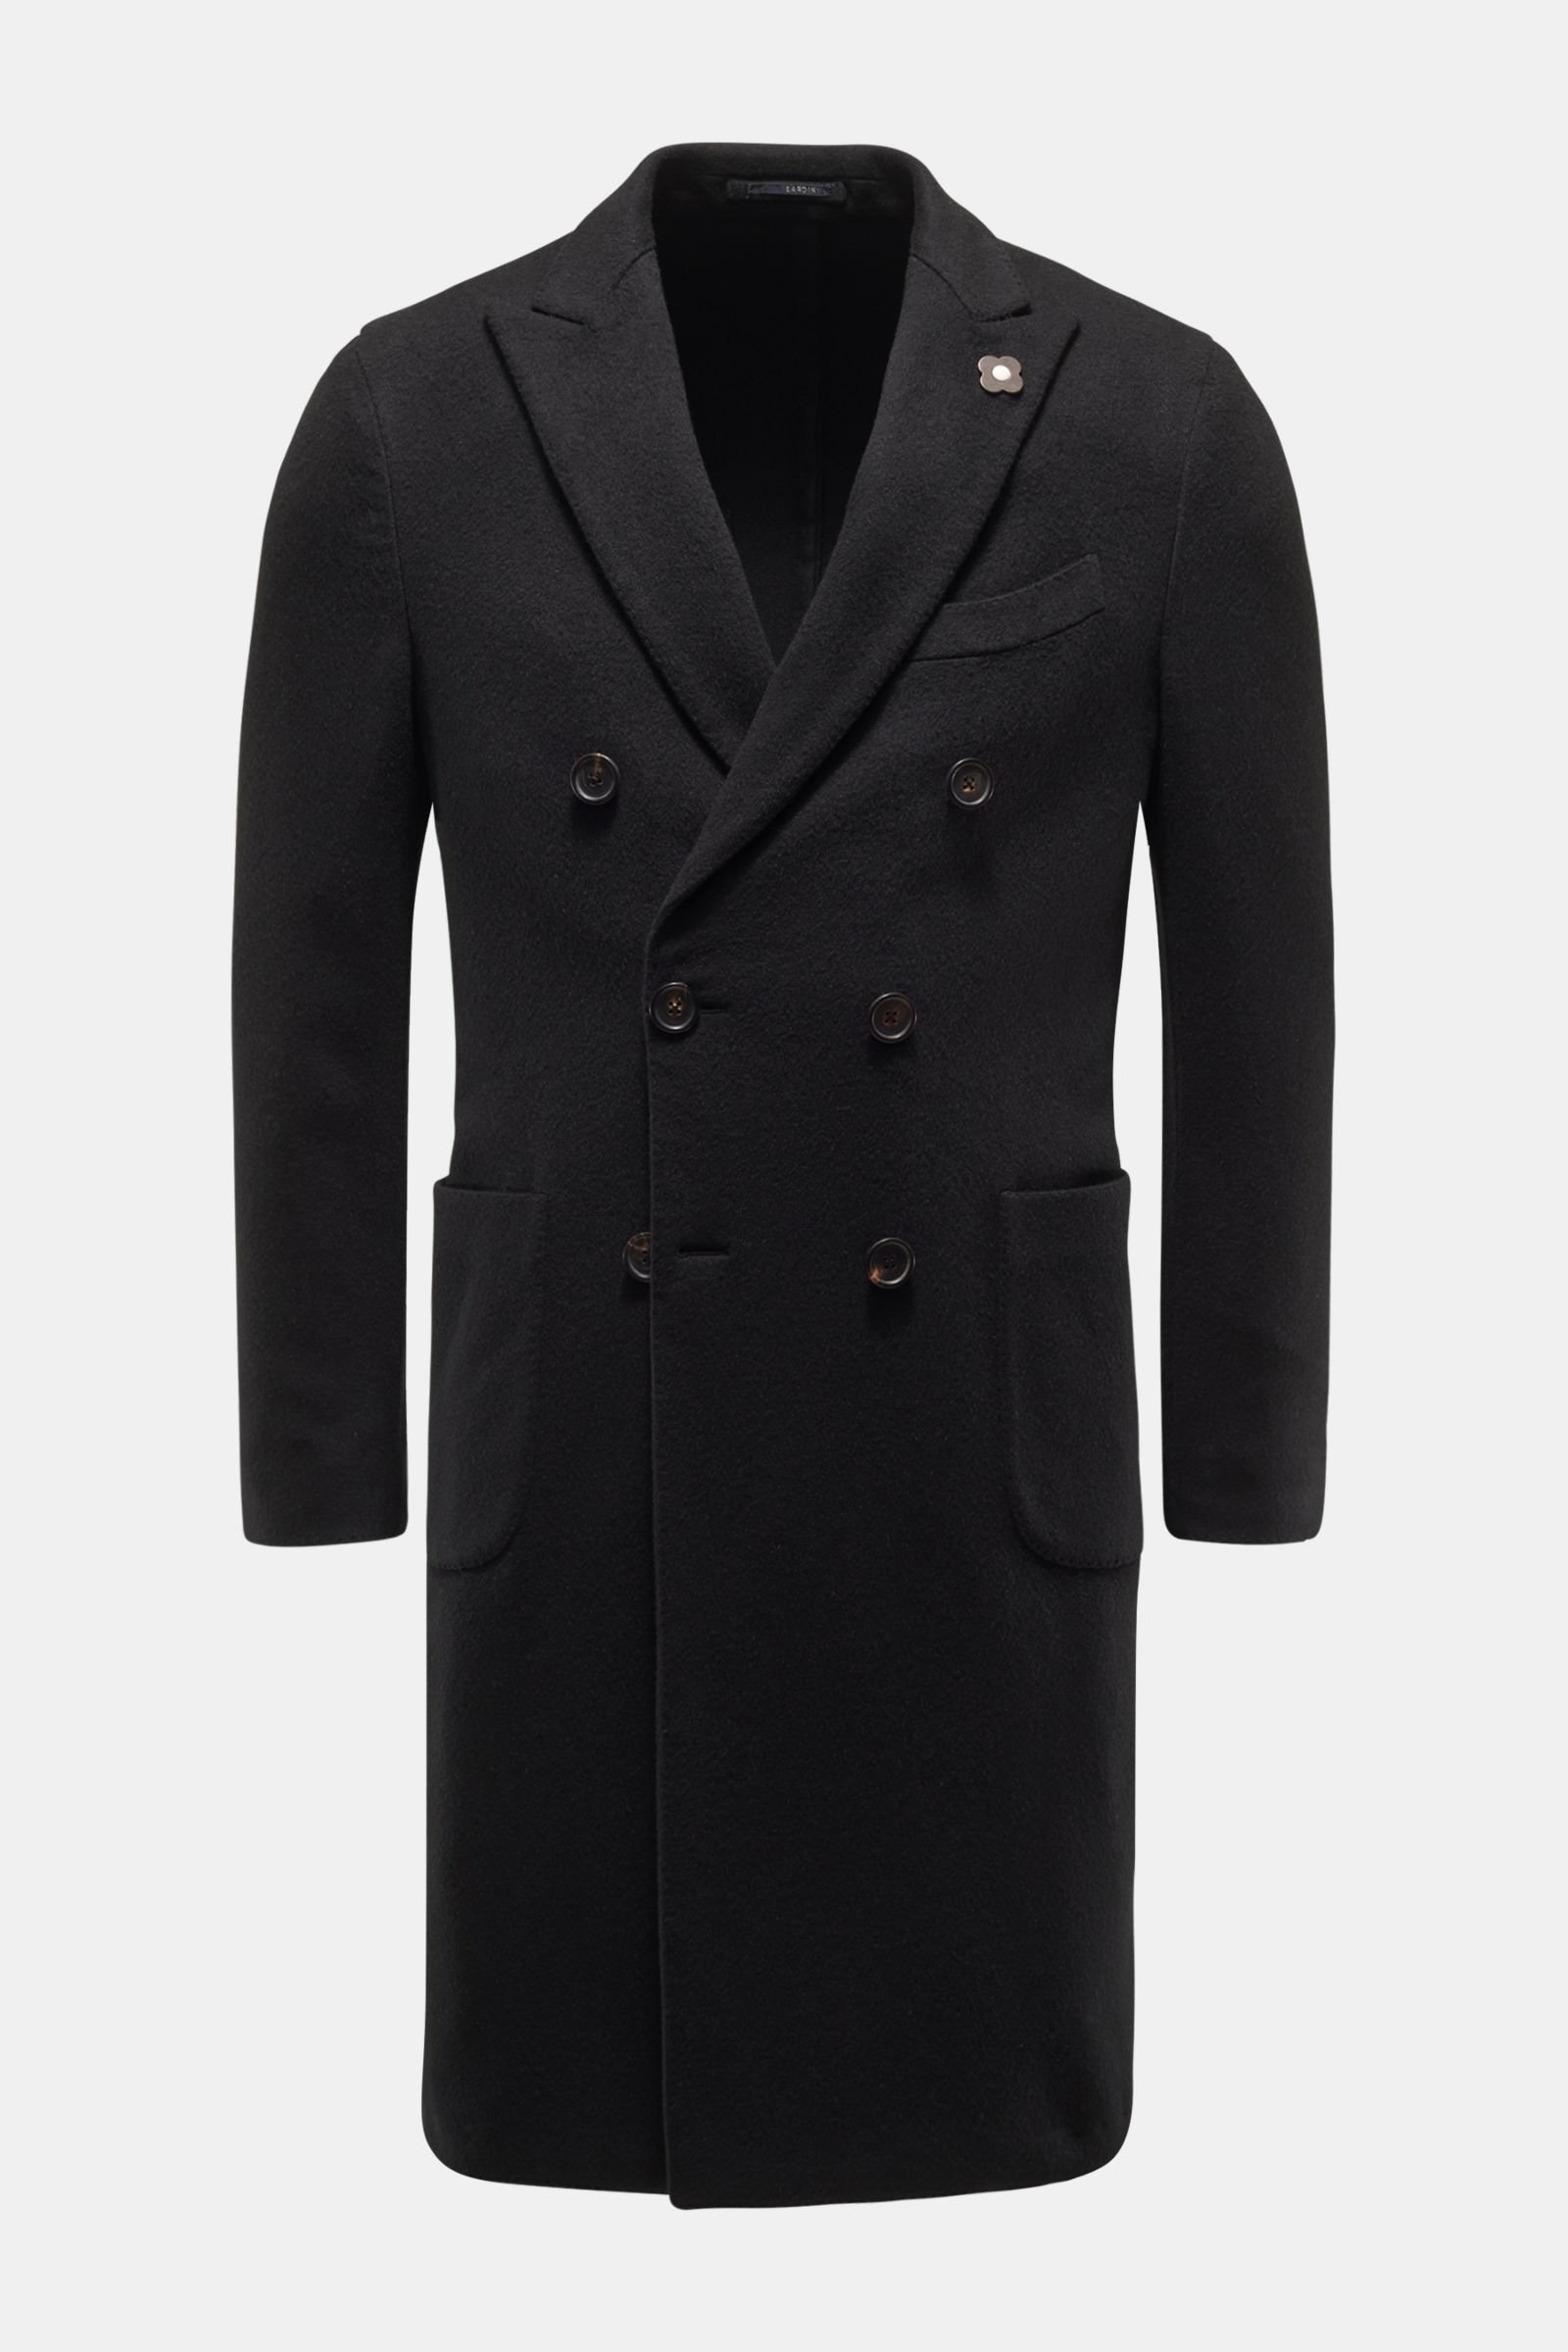 LARDINI cashmere coat black | BRAUN Hamburg